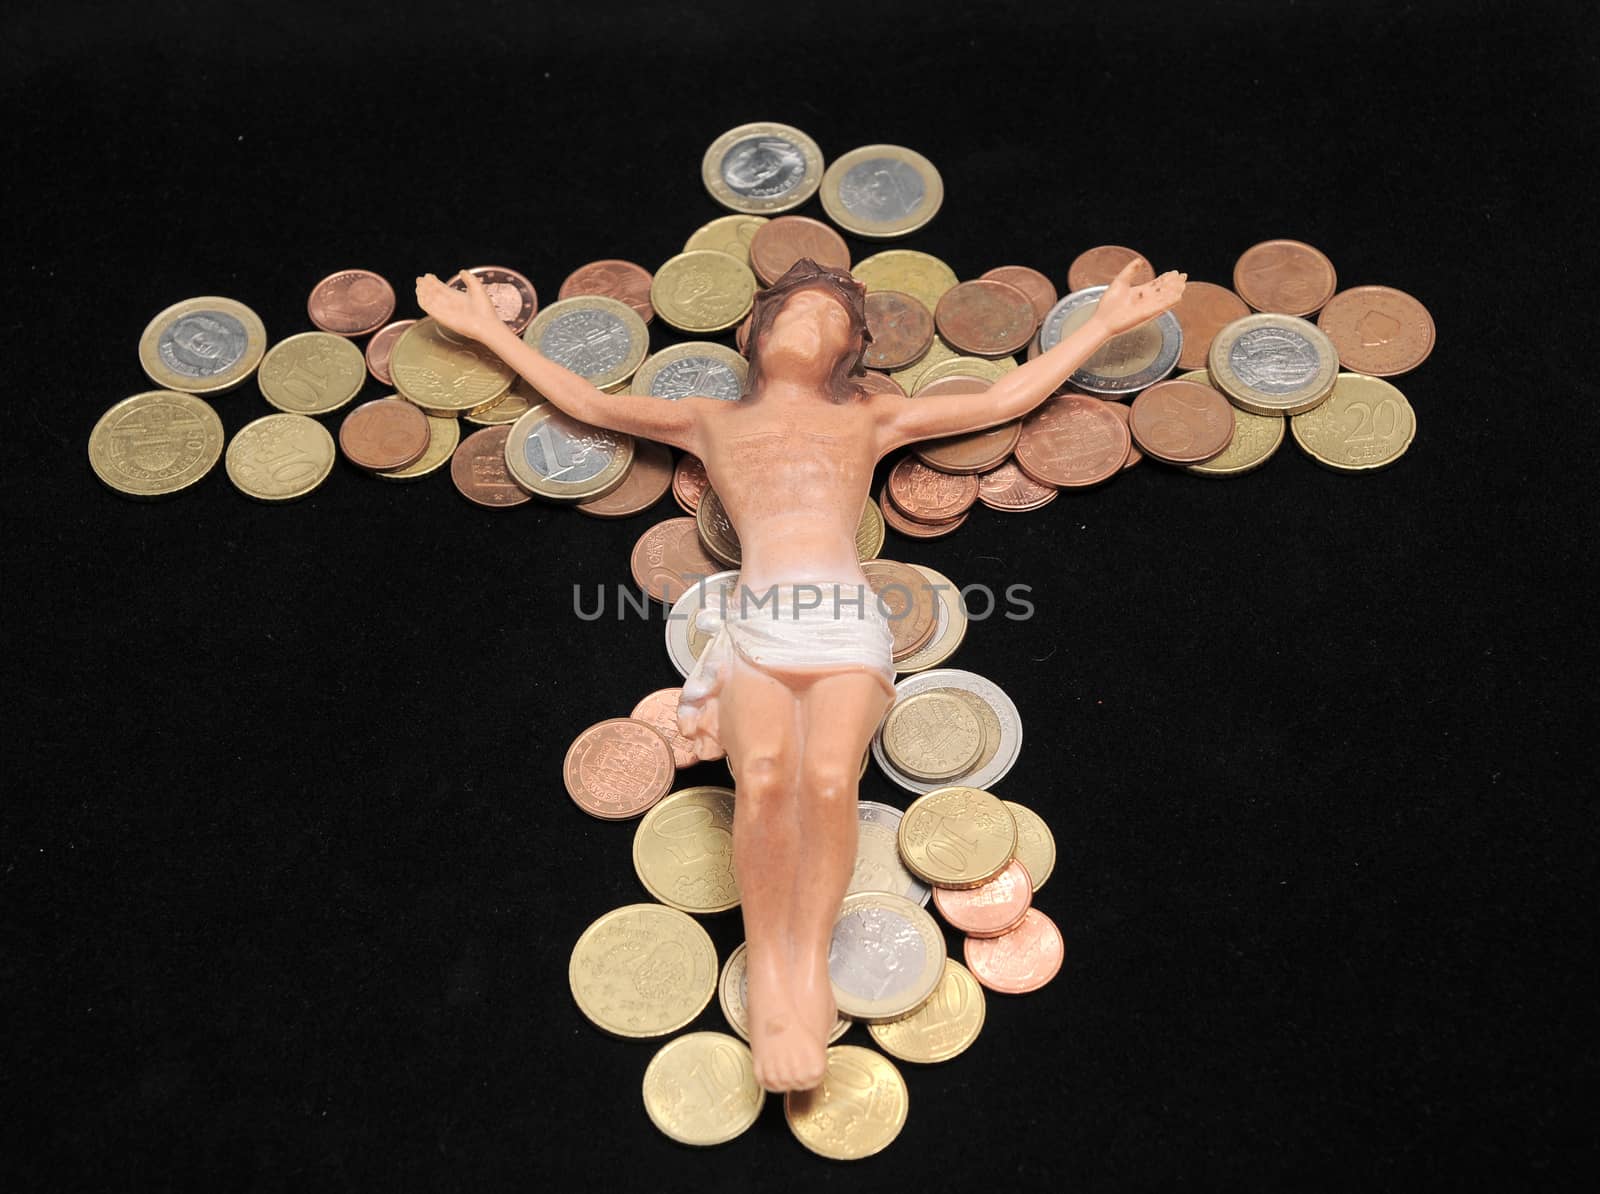 Christ and Money by underworld